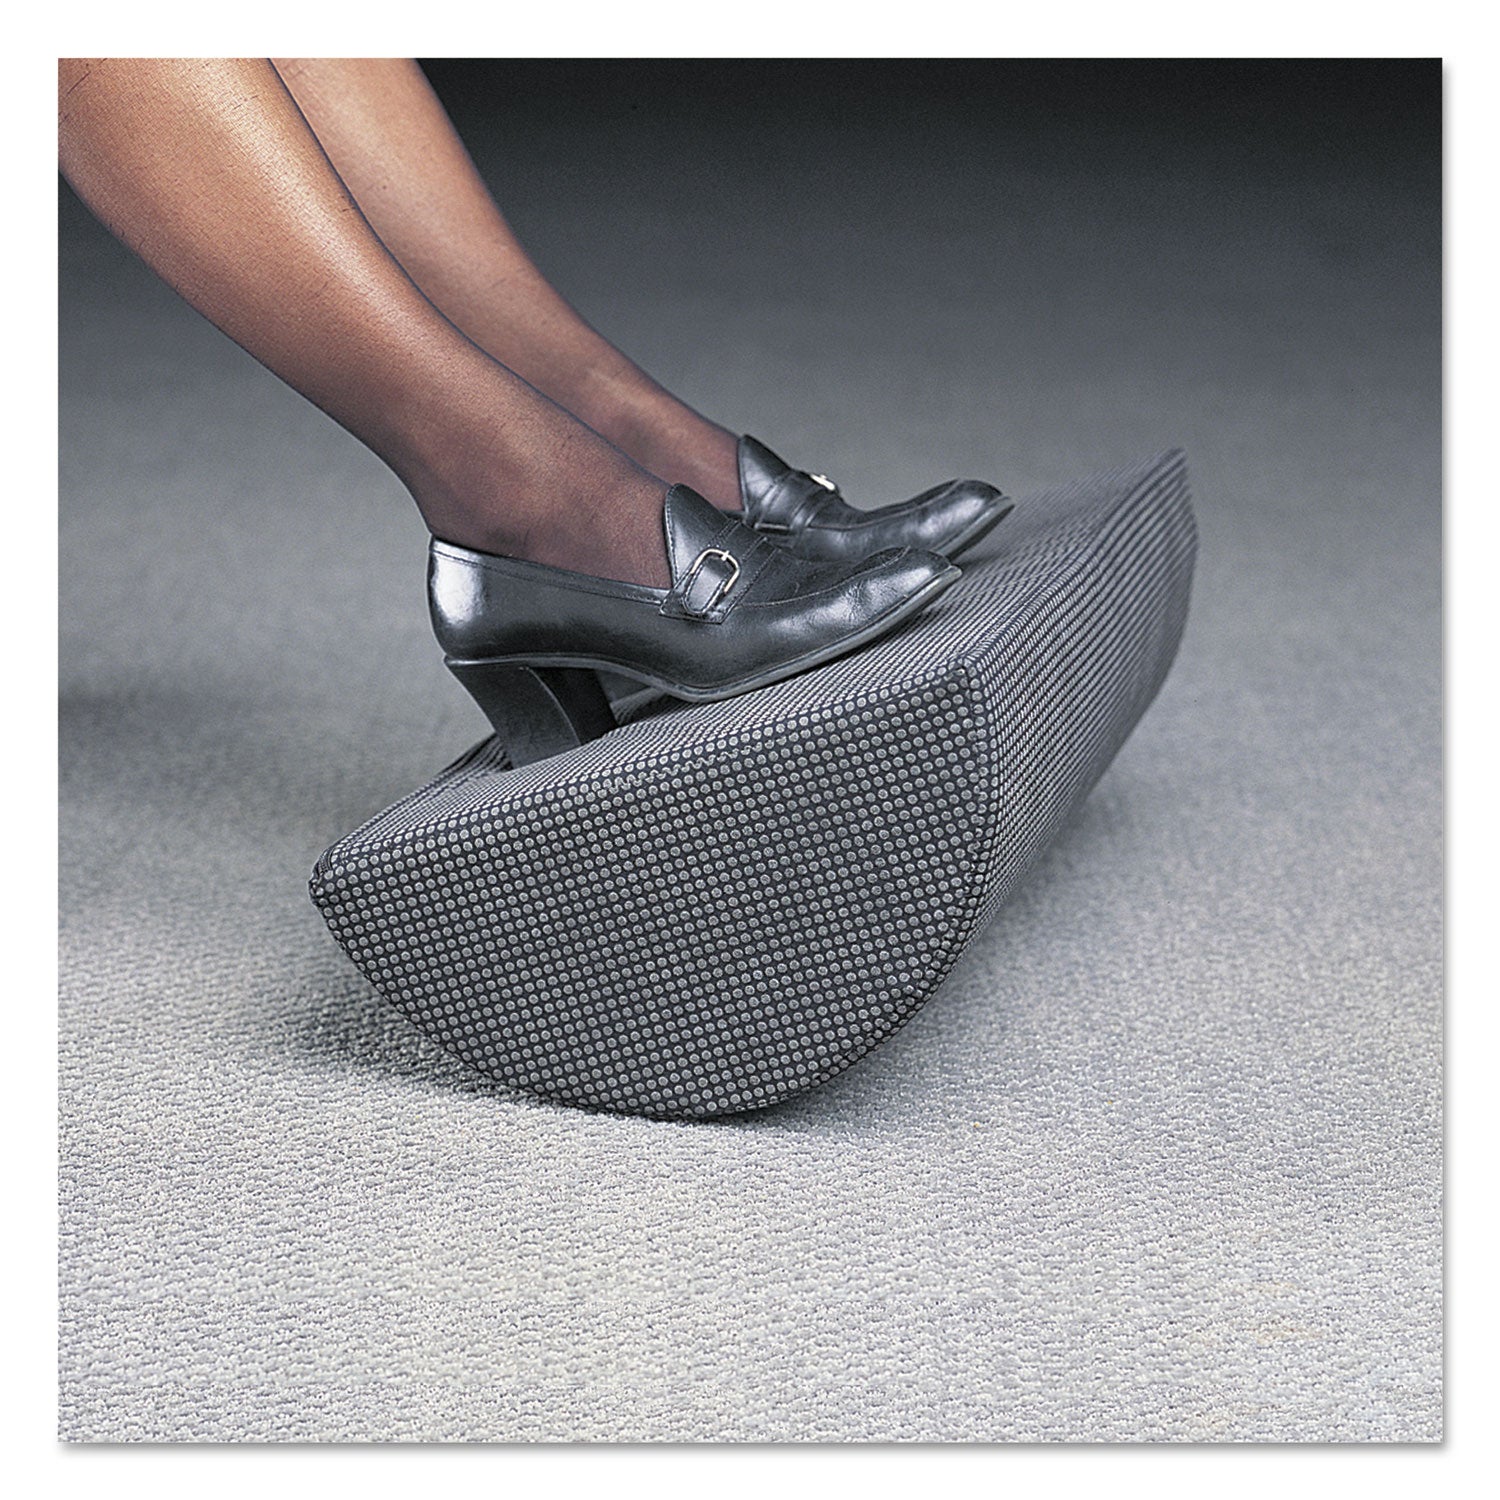 Half-Cylinder Padded Foot Cushion, 17.5w x 11.5d x 6.25h, Black - 